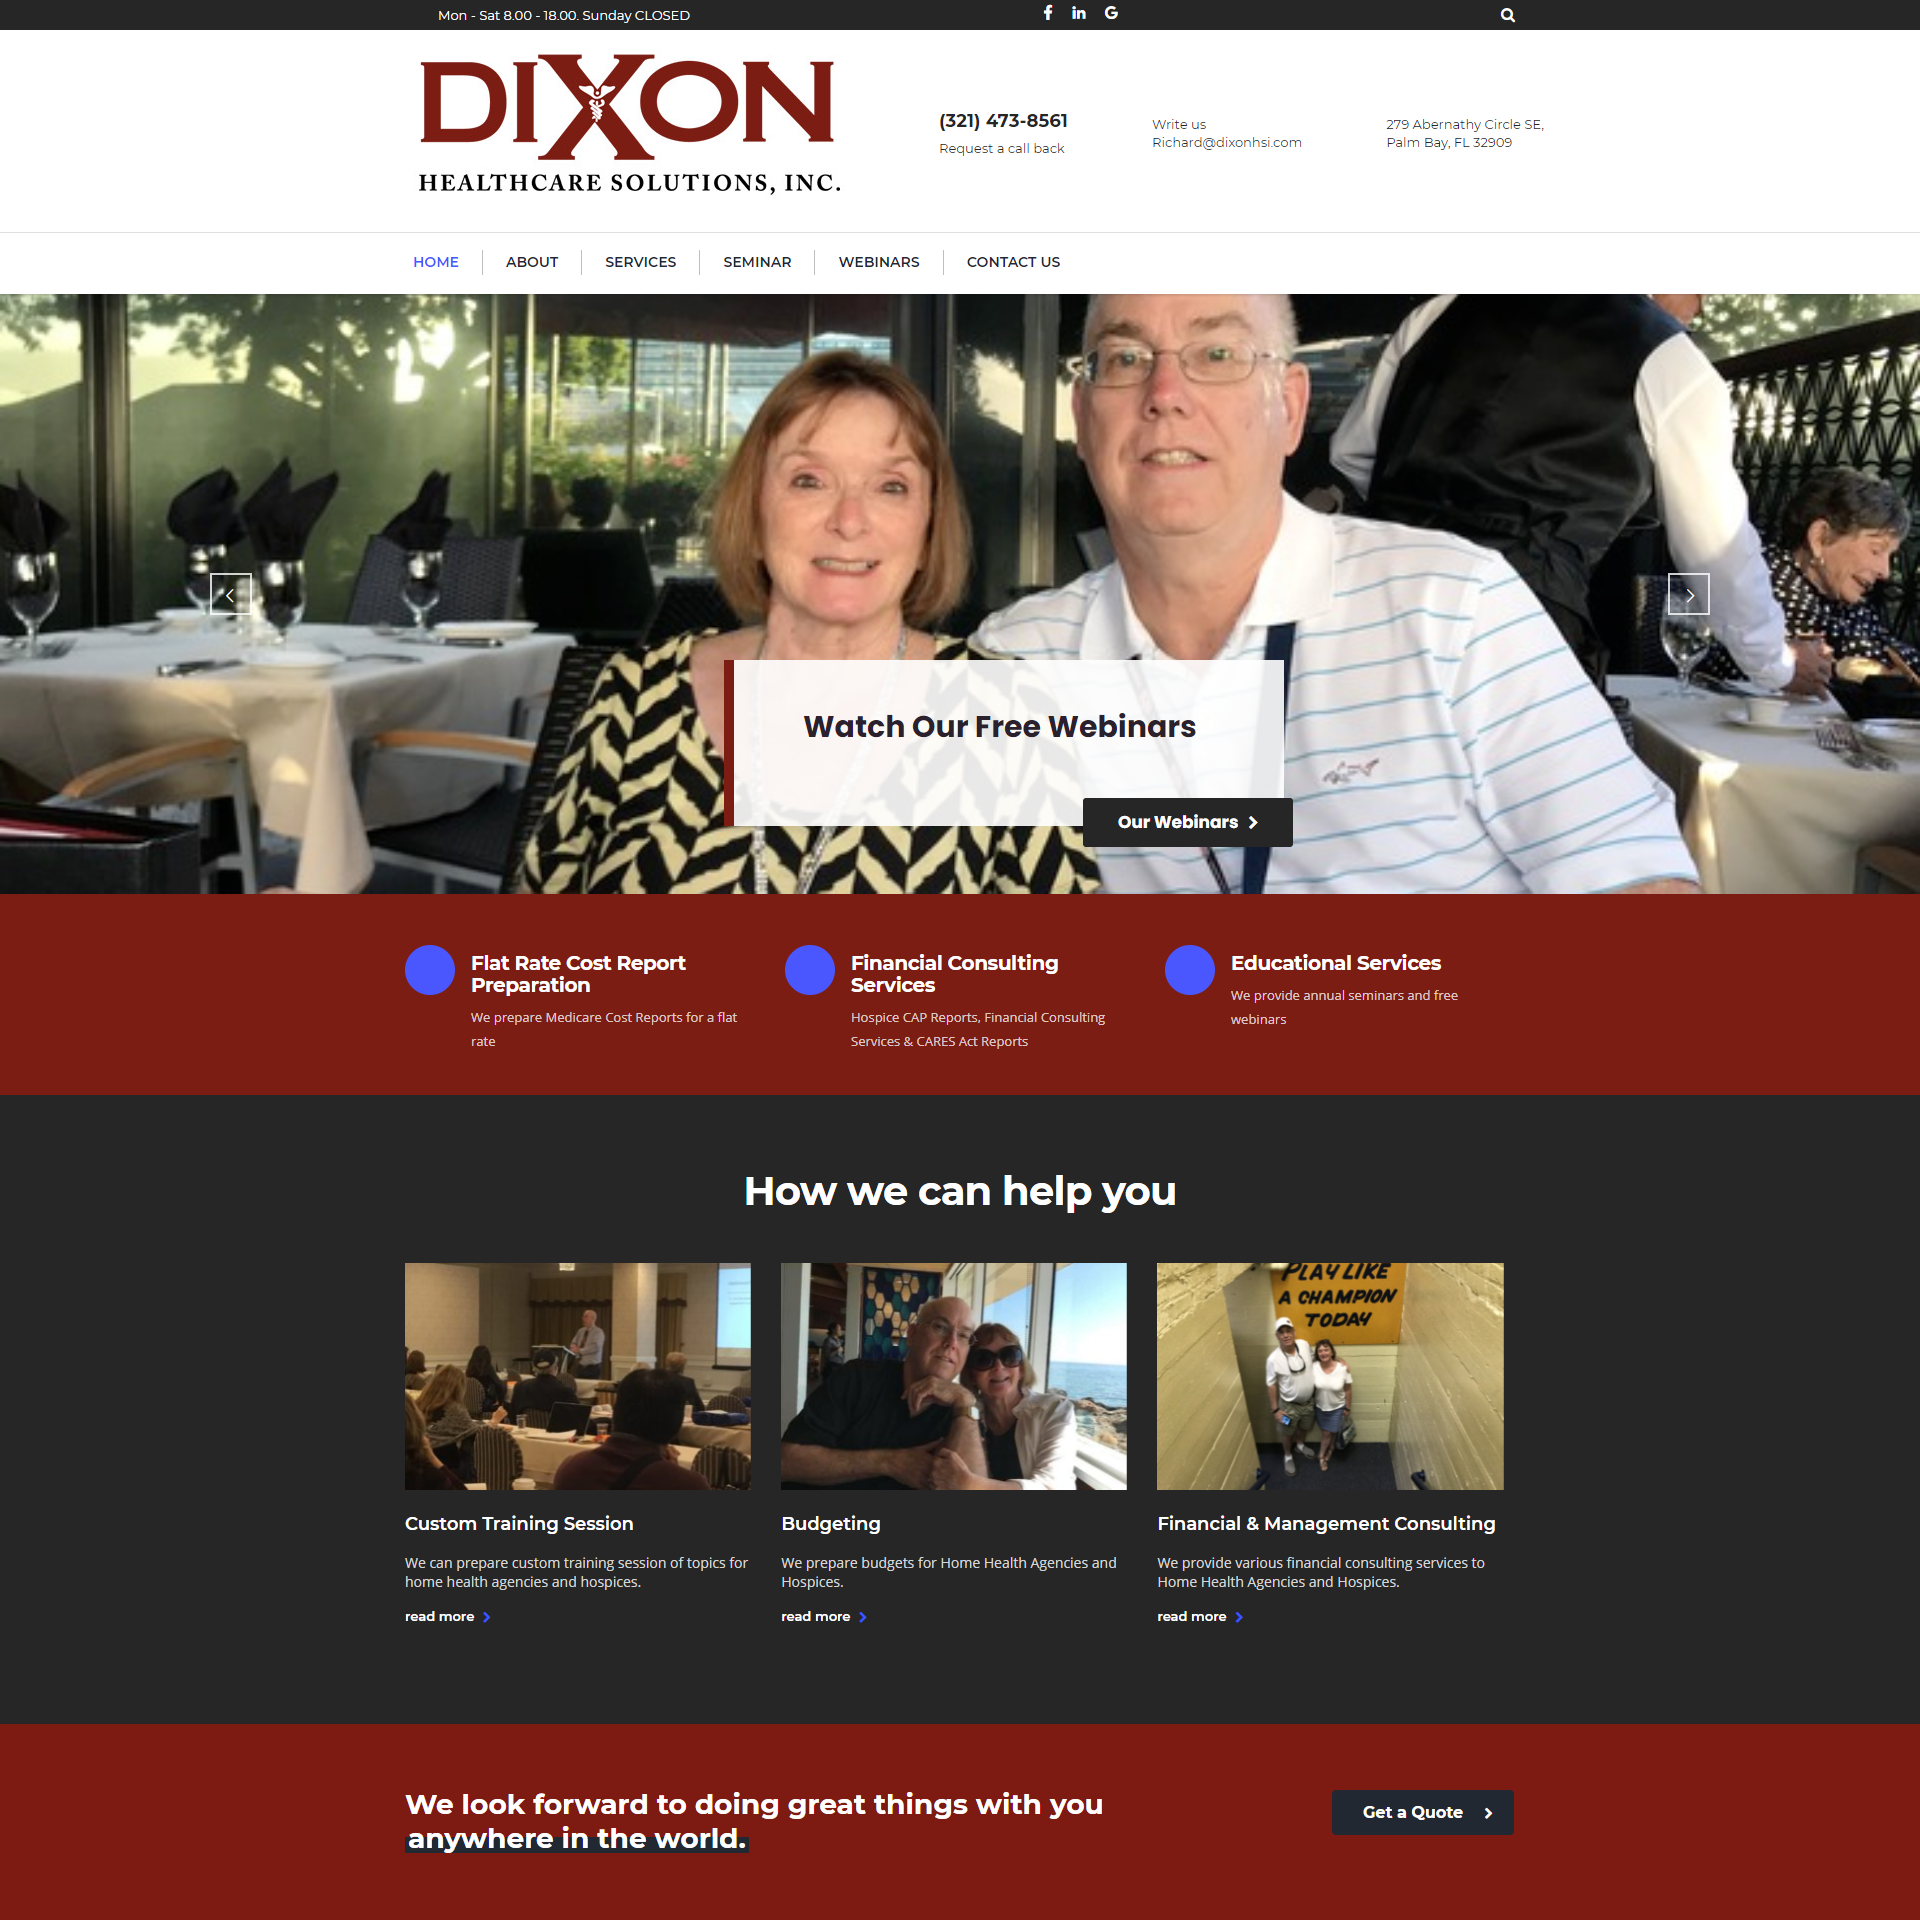 Blue Shift Web Services Web Design - Dixon Healthcare Solutions, Inc